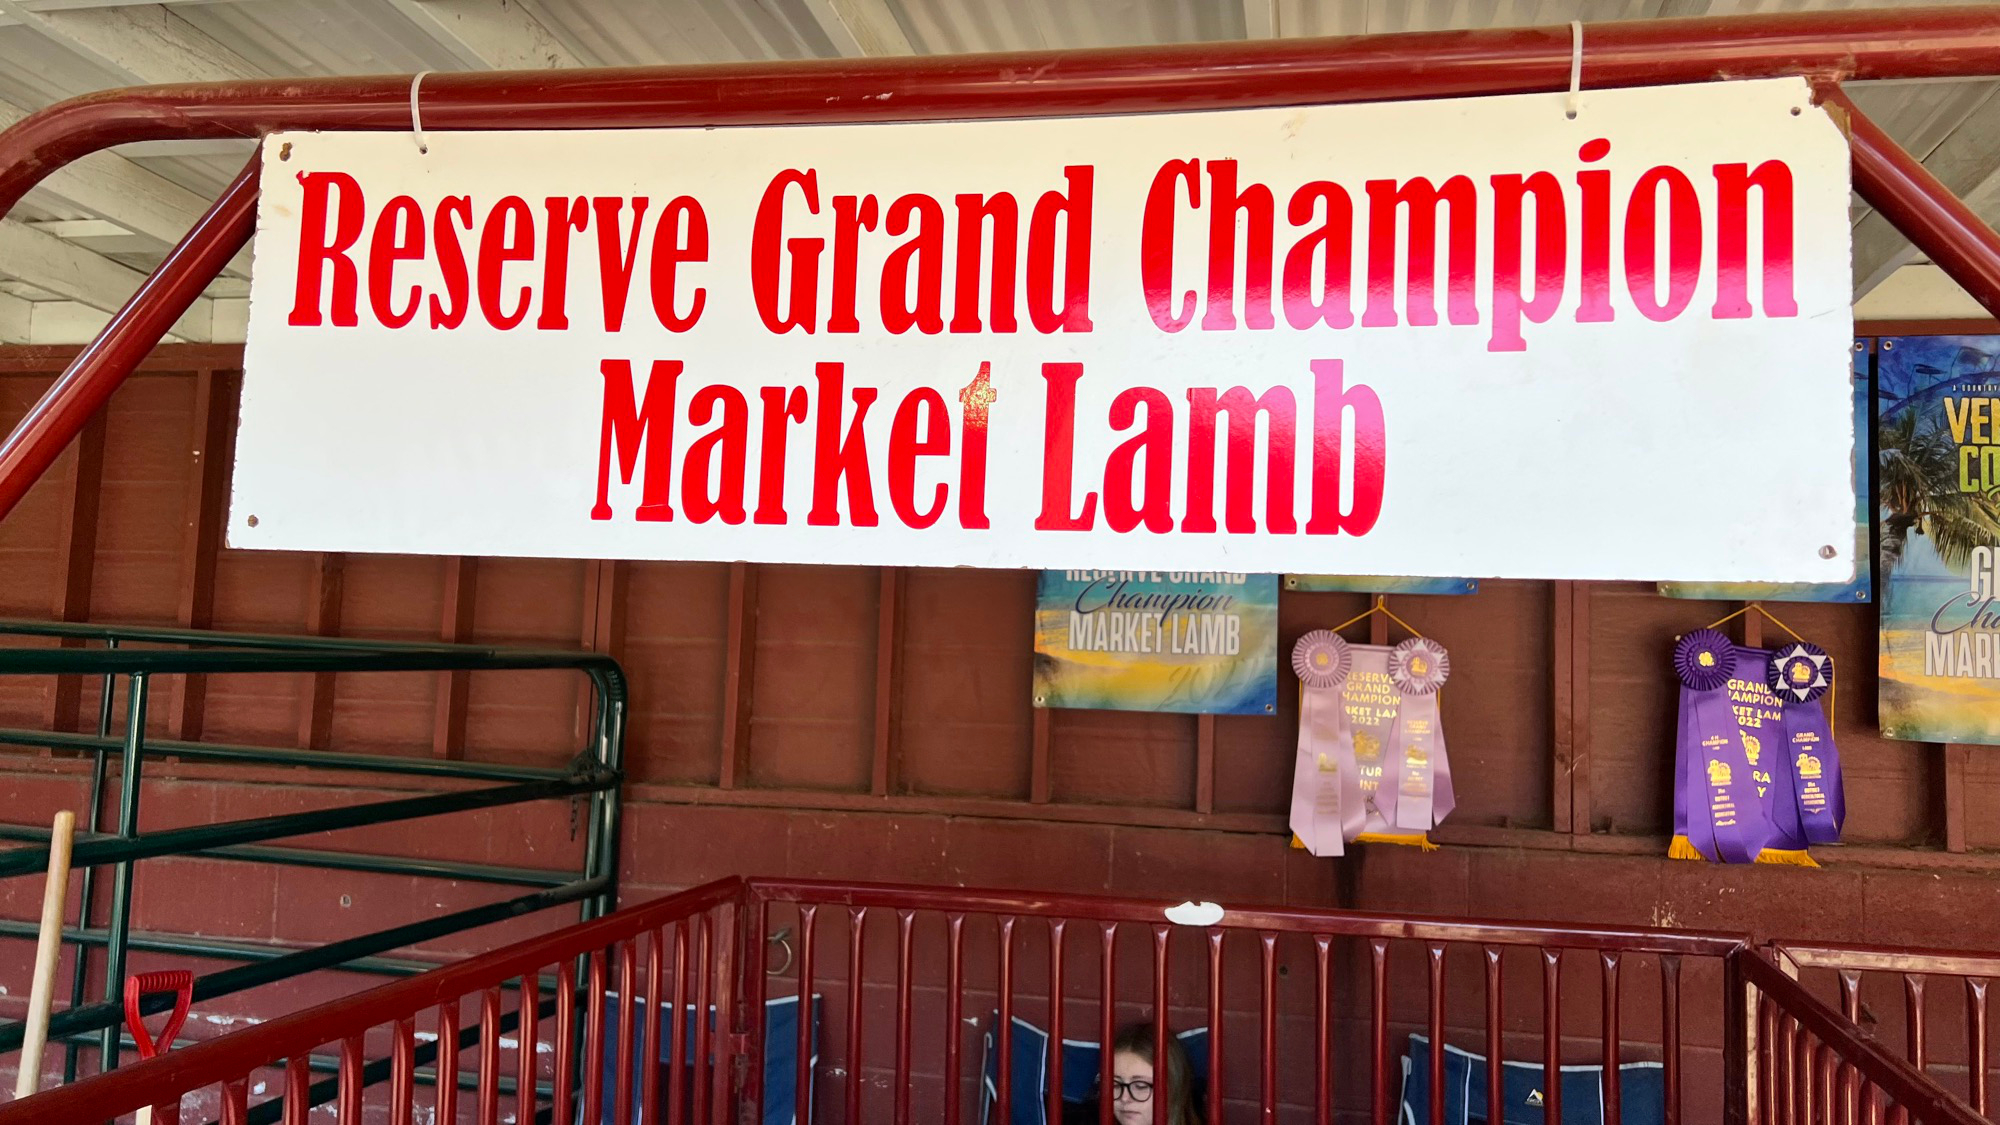 Lambs Reserve Grand Champion Market Lamb